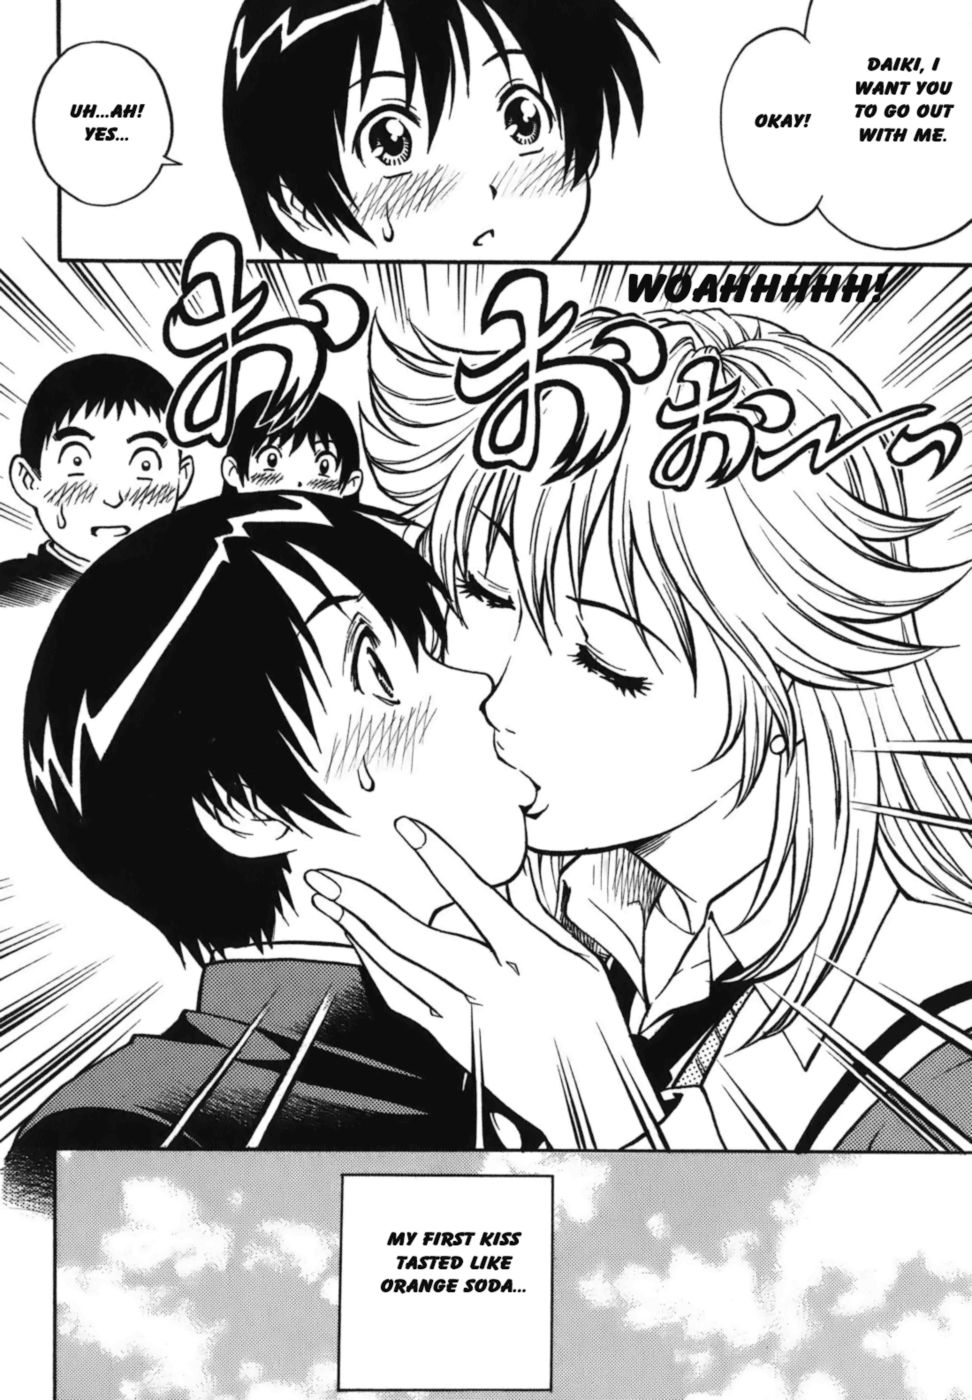 Hentai Manga Comic-Awkward Girl vs Virginal Masochist Boy-Read-8